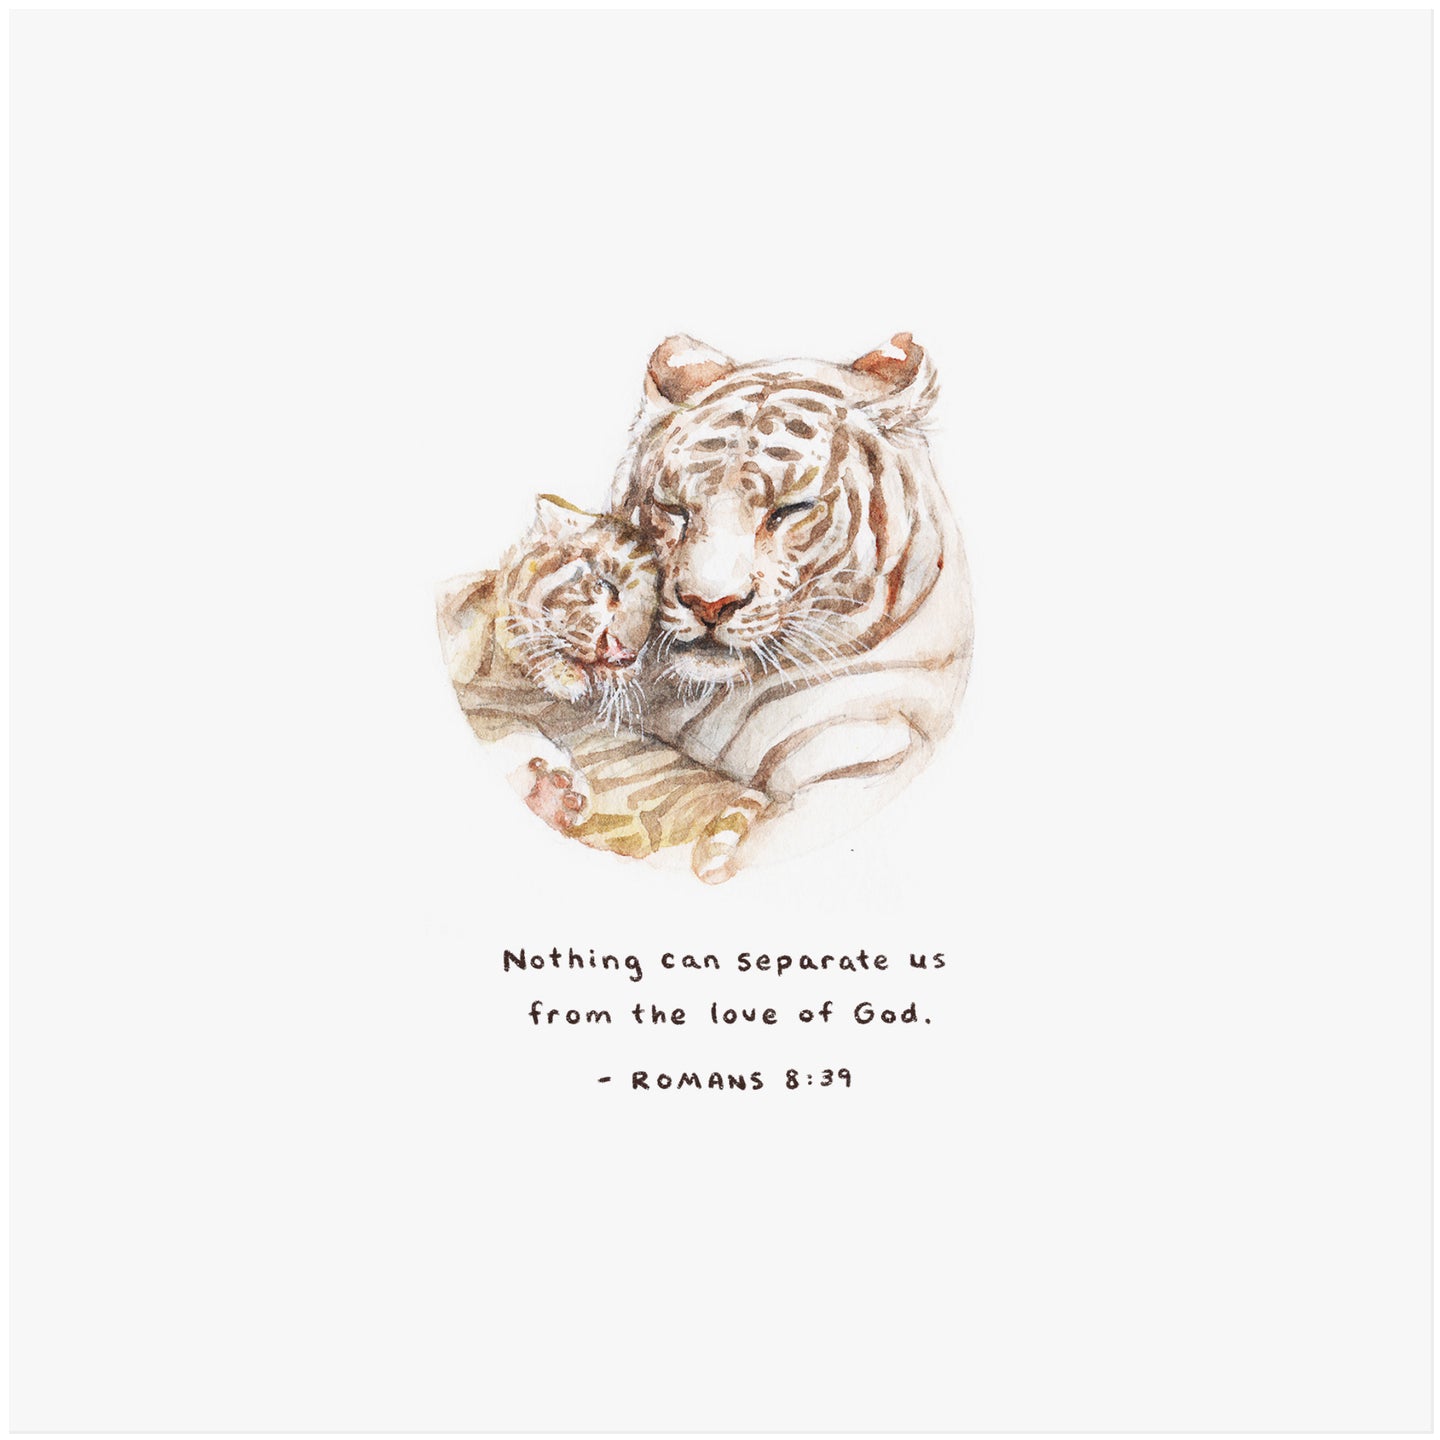 Romans 8:39 Artwork of tiger and cub - 